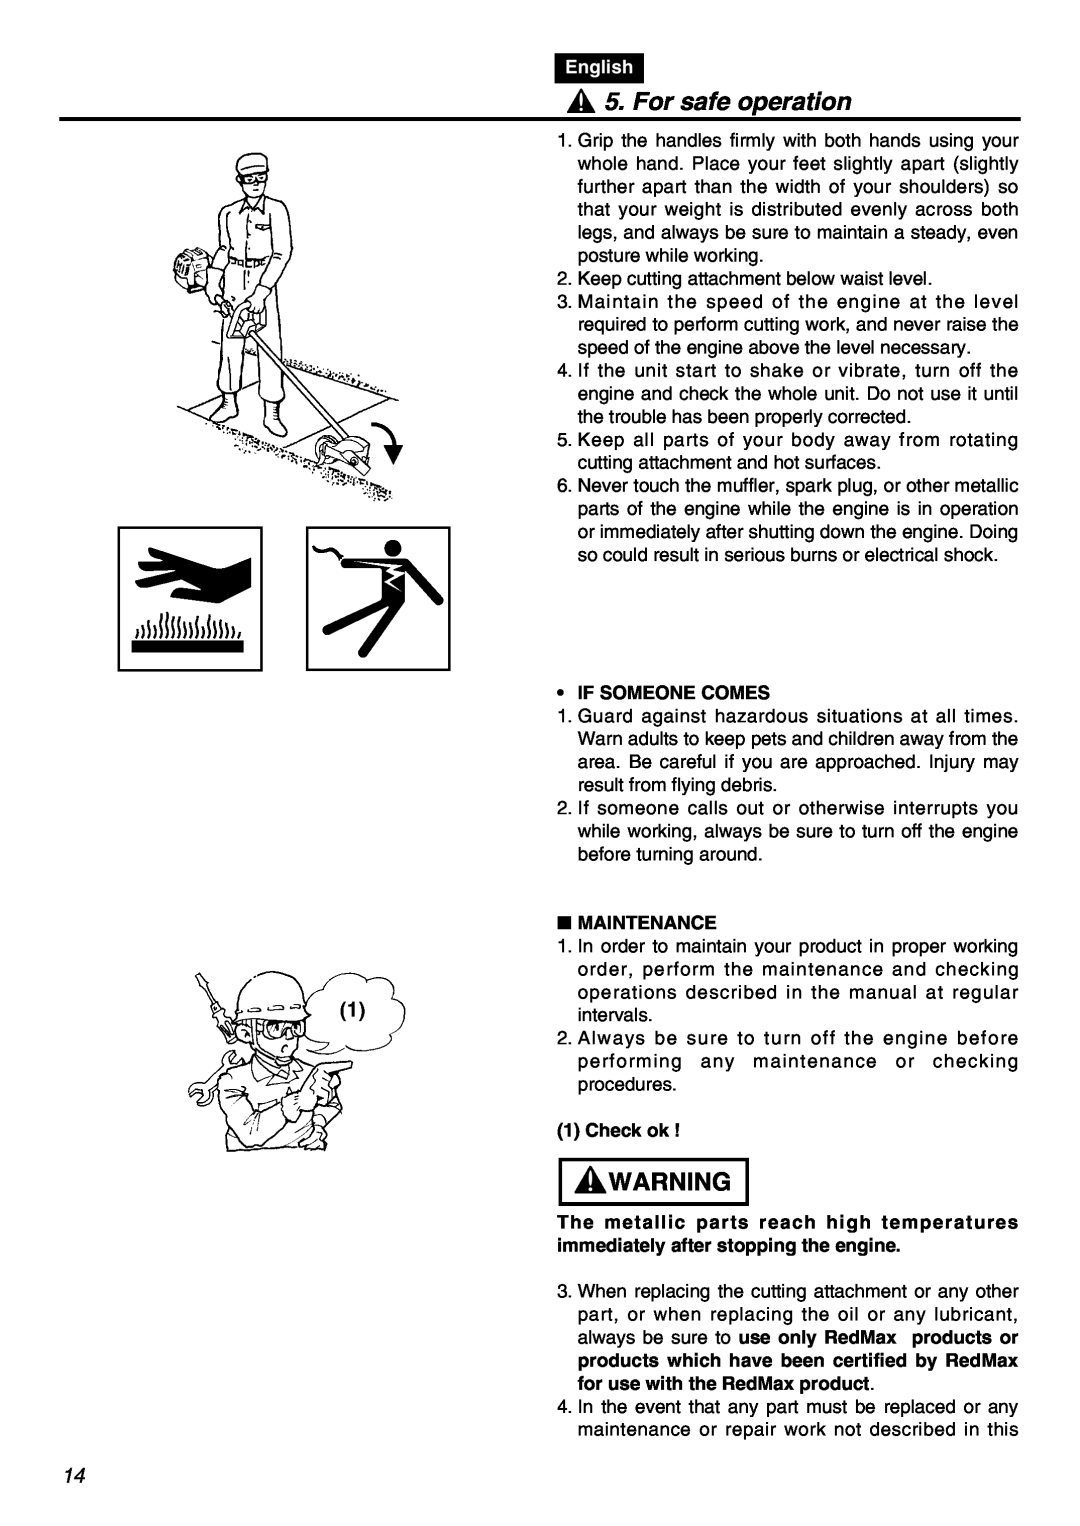 Zenoah HEZ2602S manual For safe operation, English, If Someone Comes, Maintenance, Check ok 